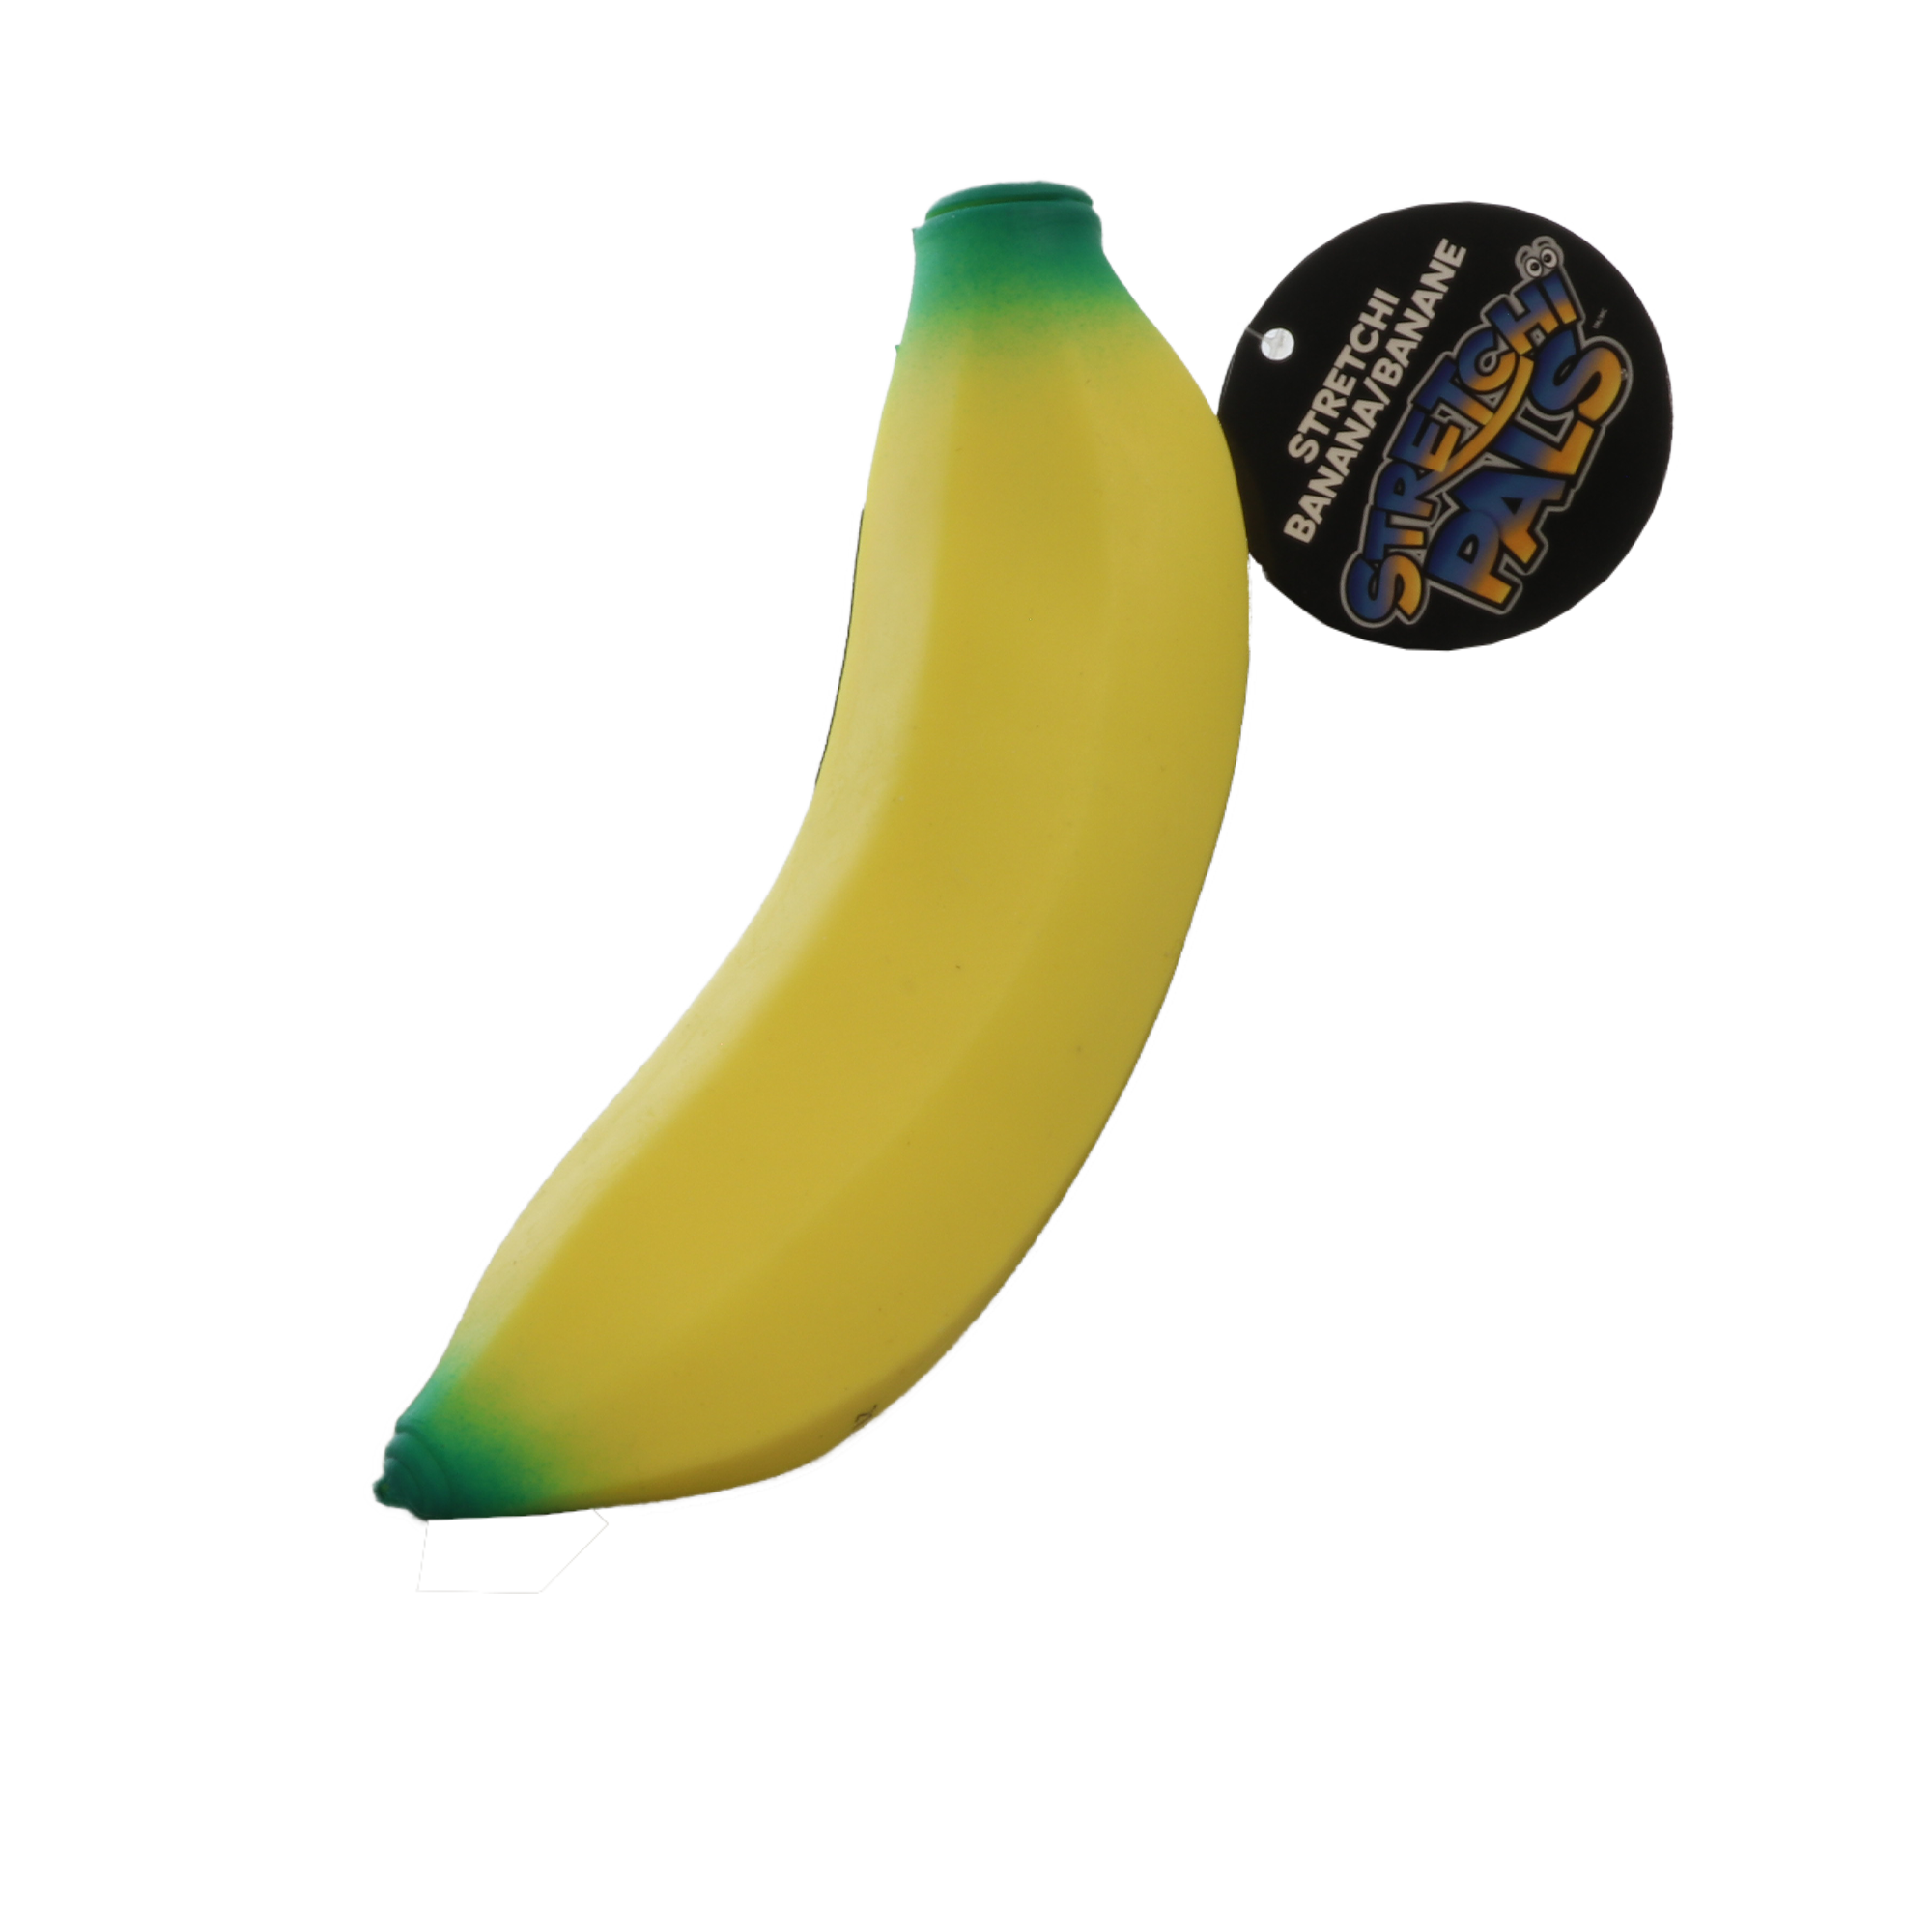 Stretchi Banana